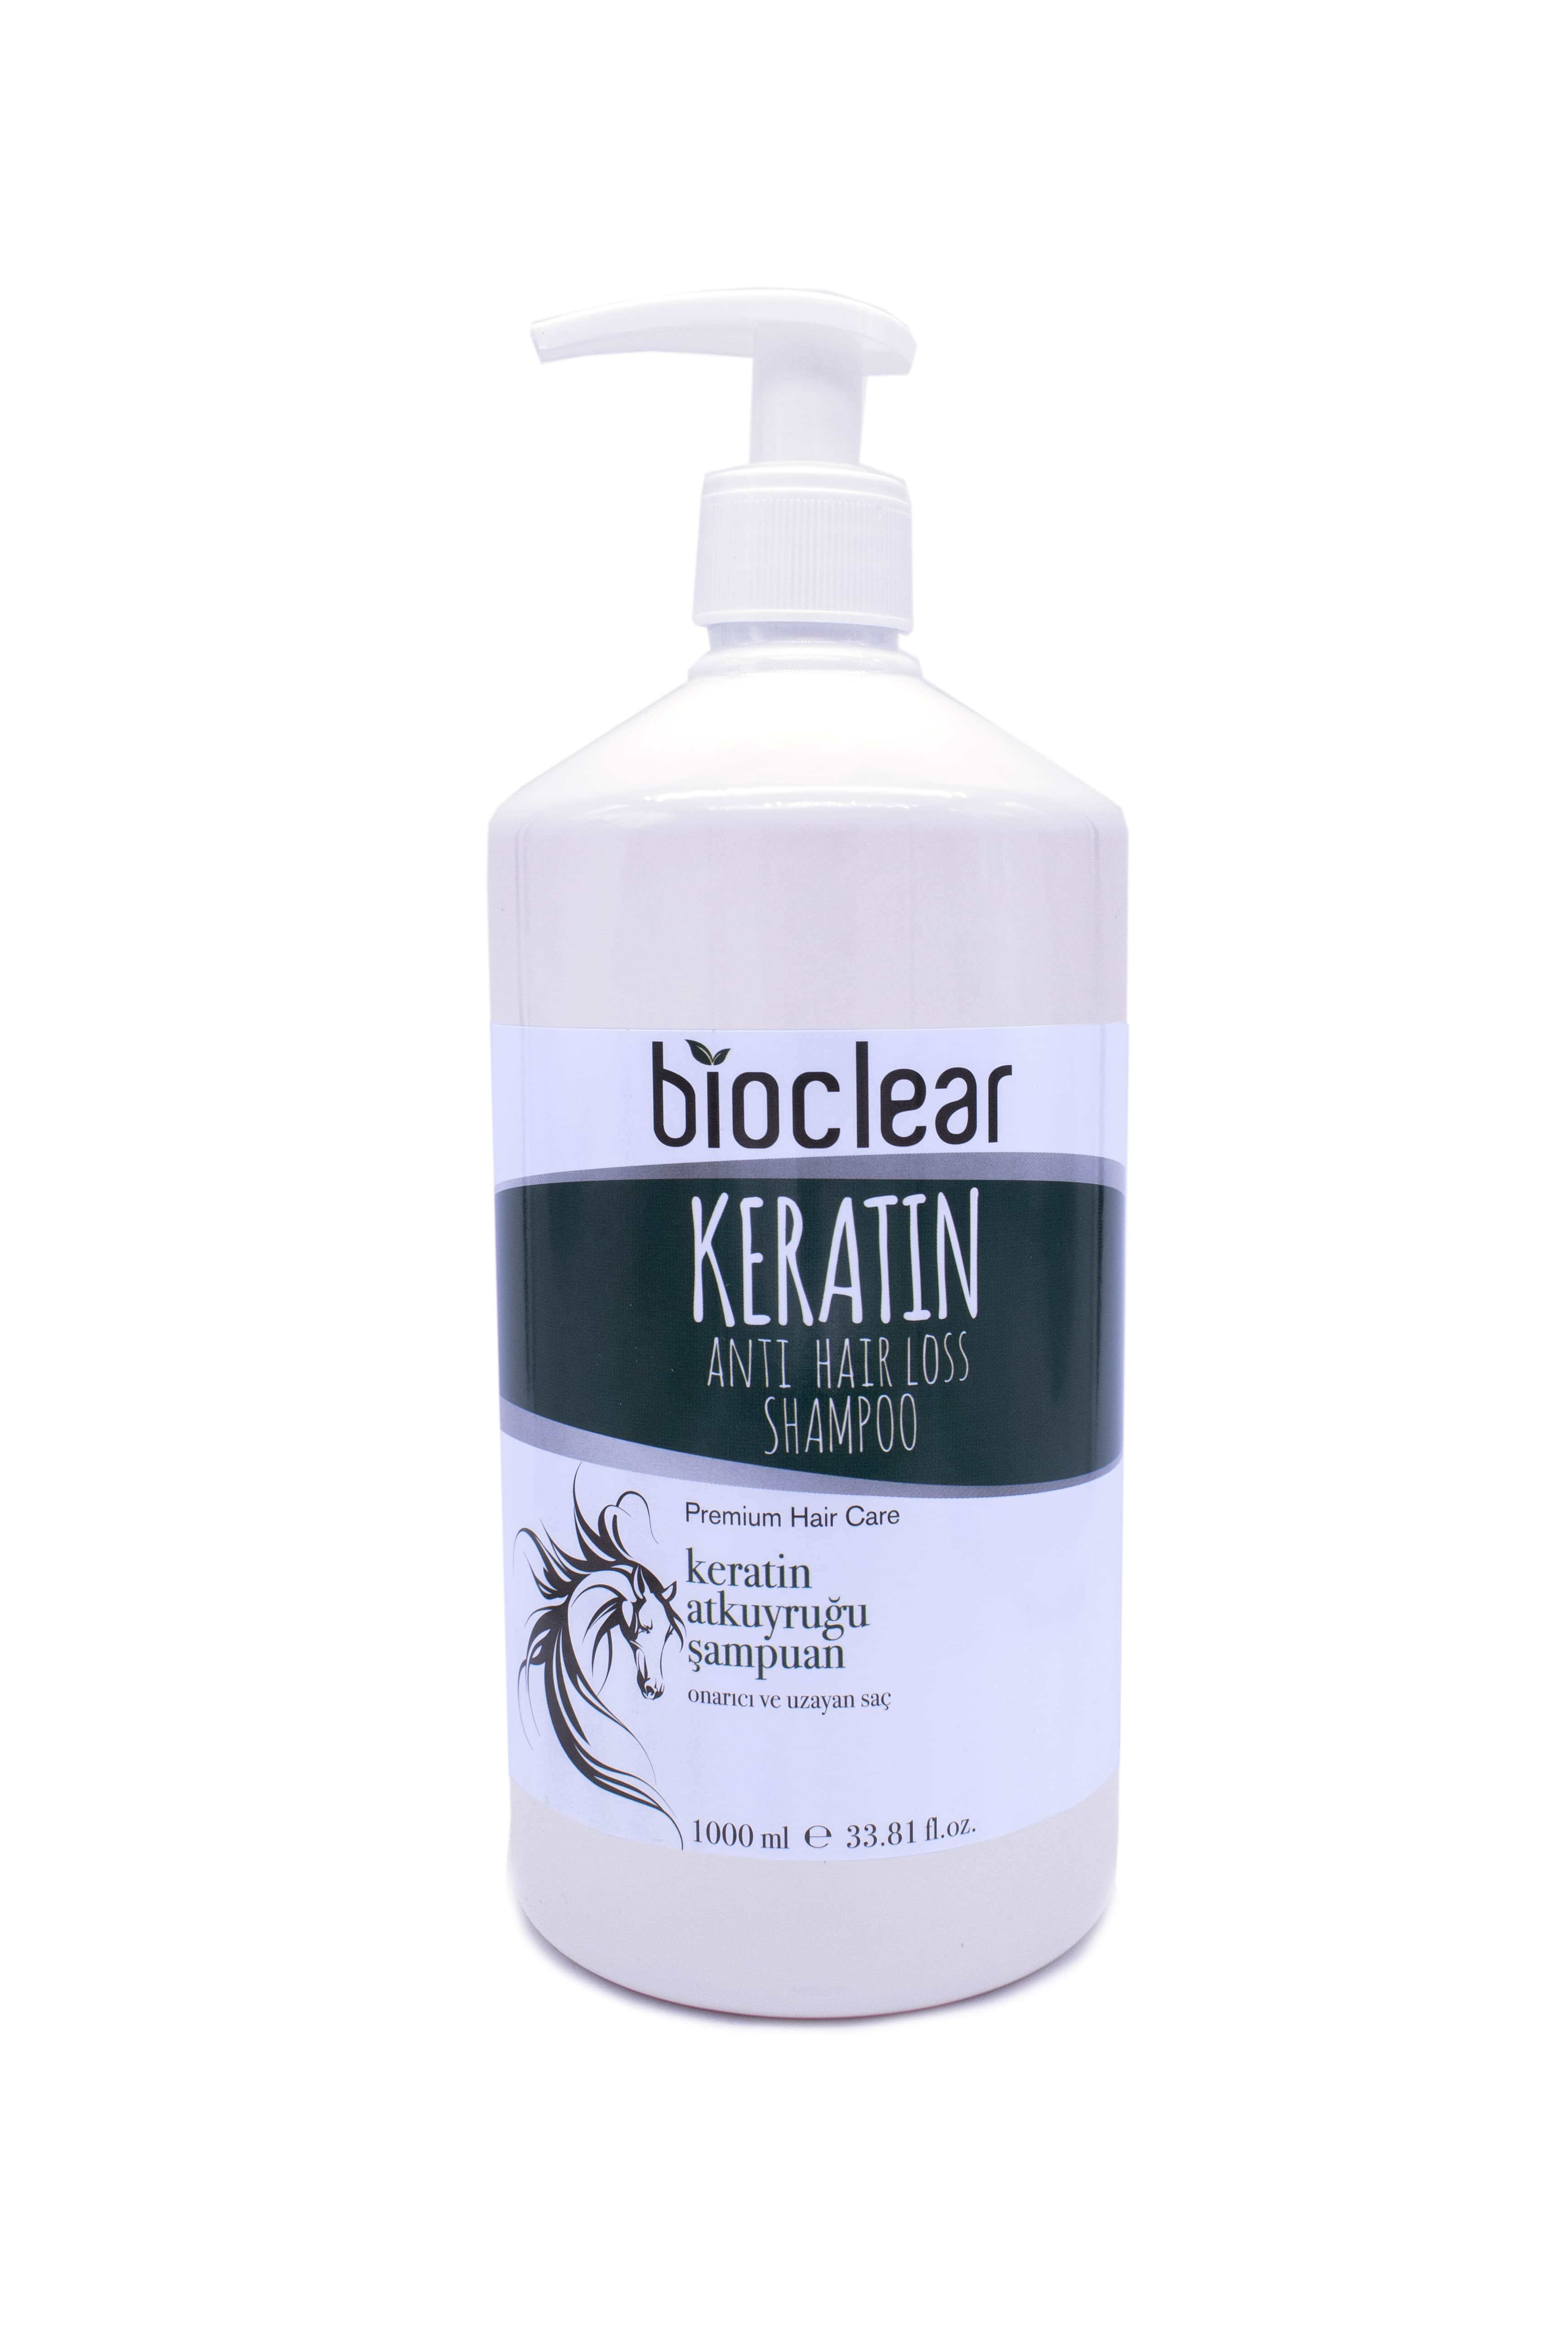 Bioclear Saç Dökülmesine Karşı Şampuan Keratin ve At Kuyruğu 1000 ml